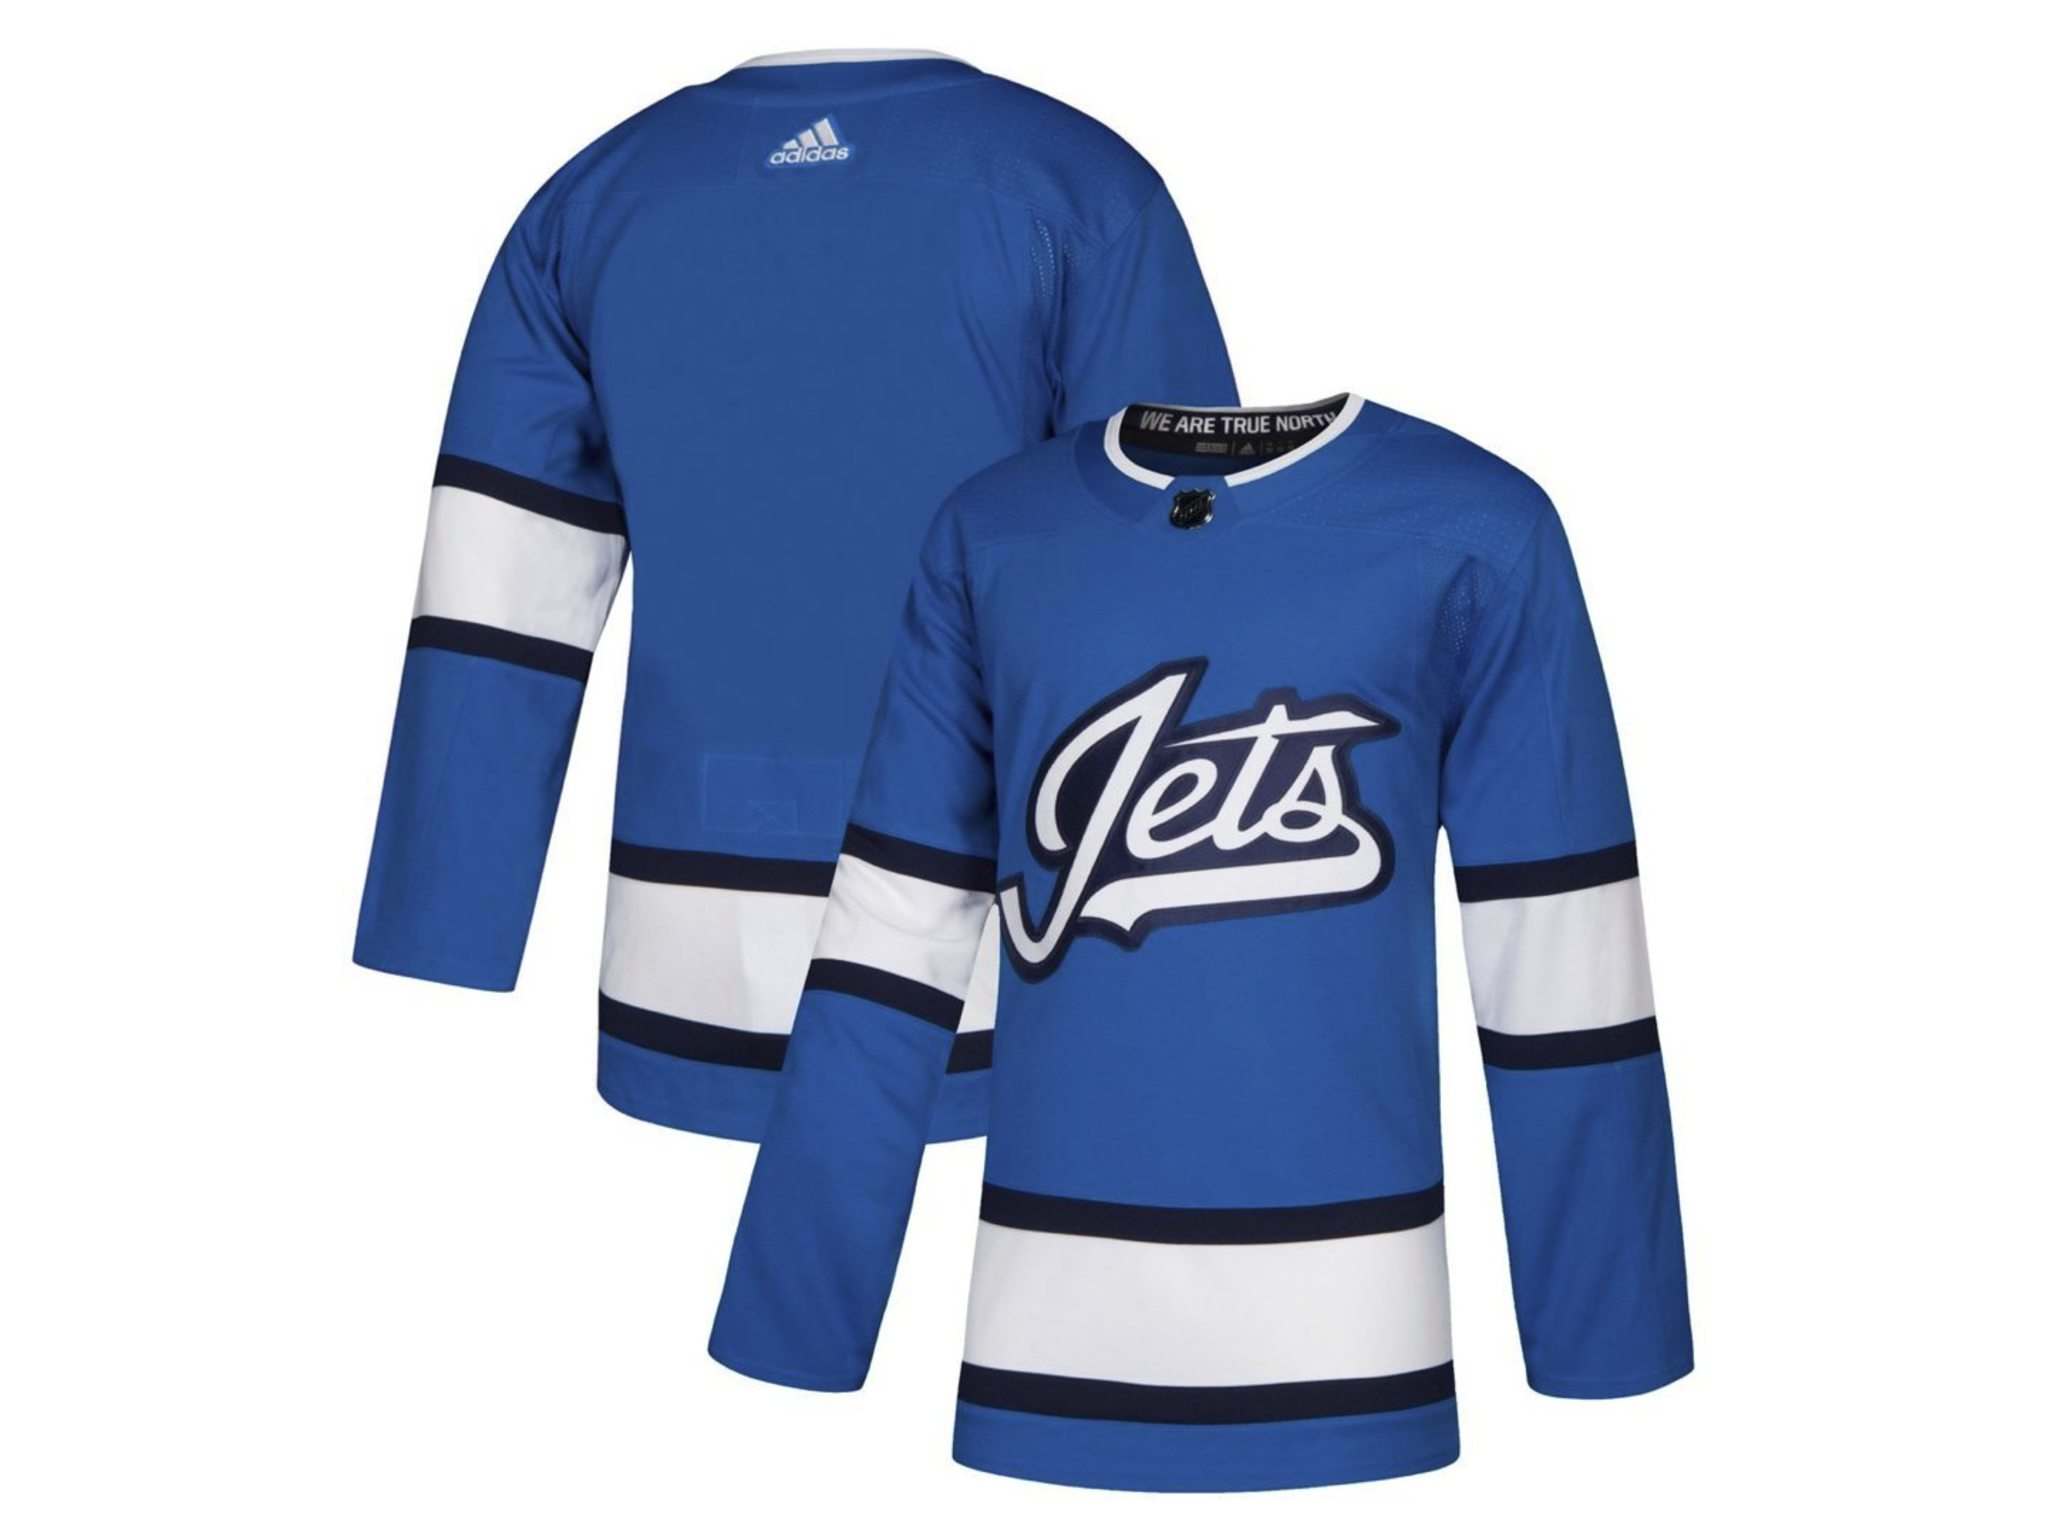 Winnipeg Jets Jersey Logo - Internet might have offered sneak peek at new Jets jersey